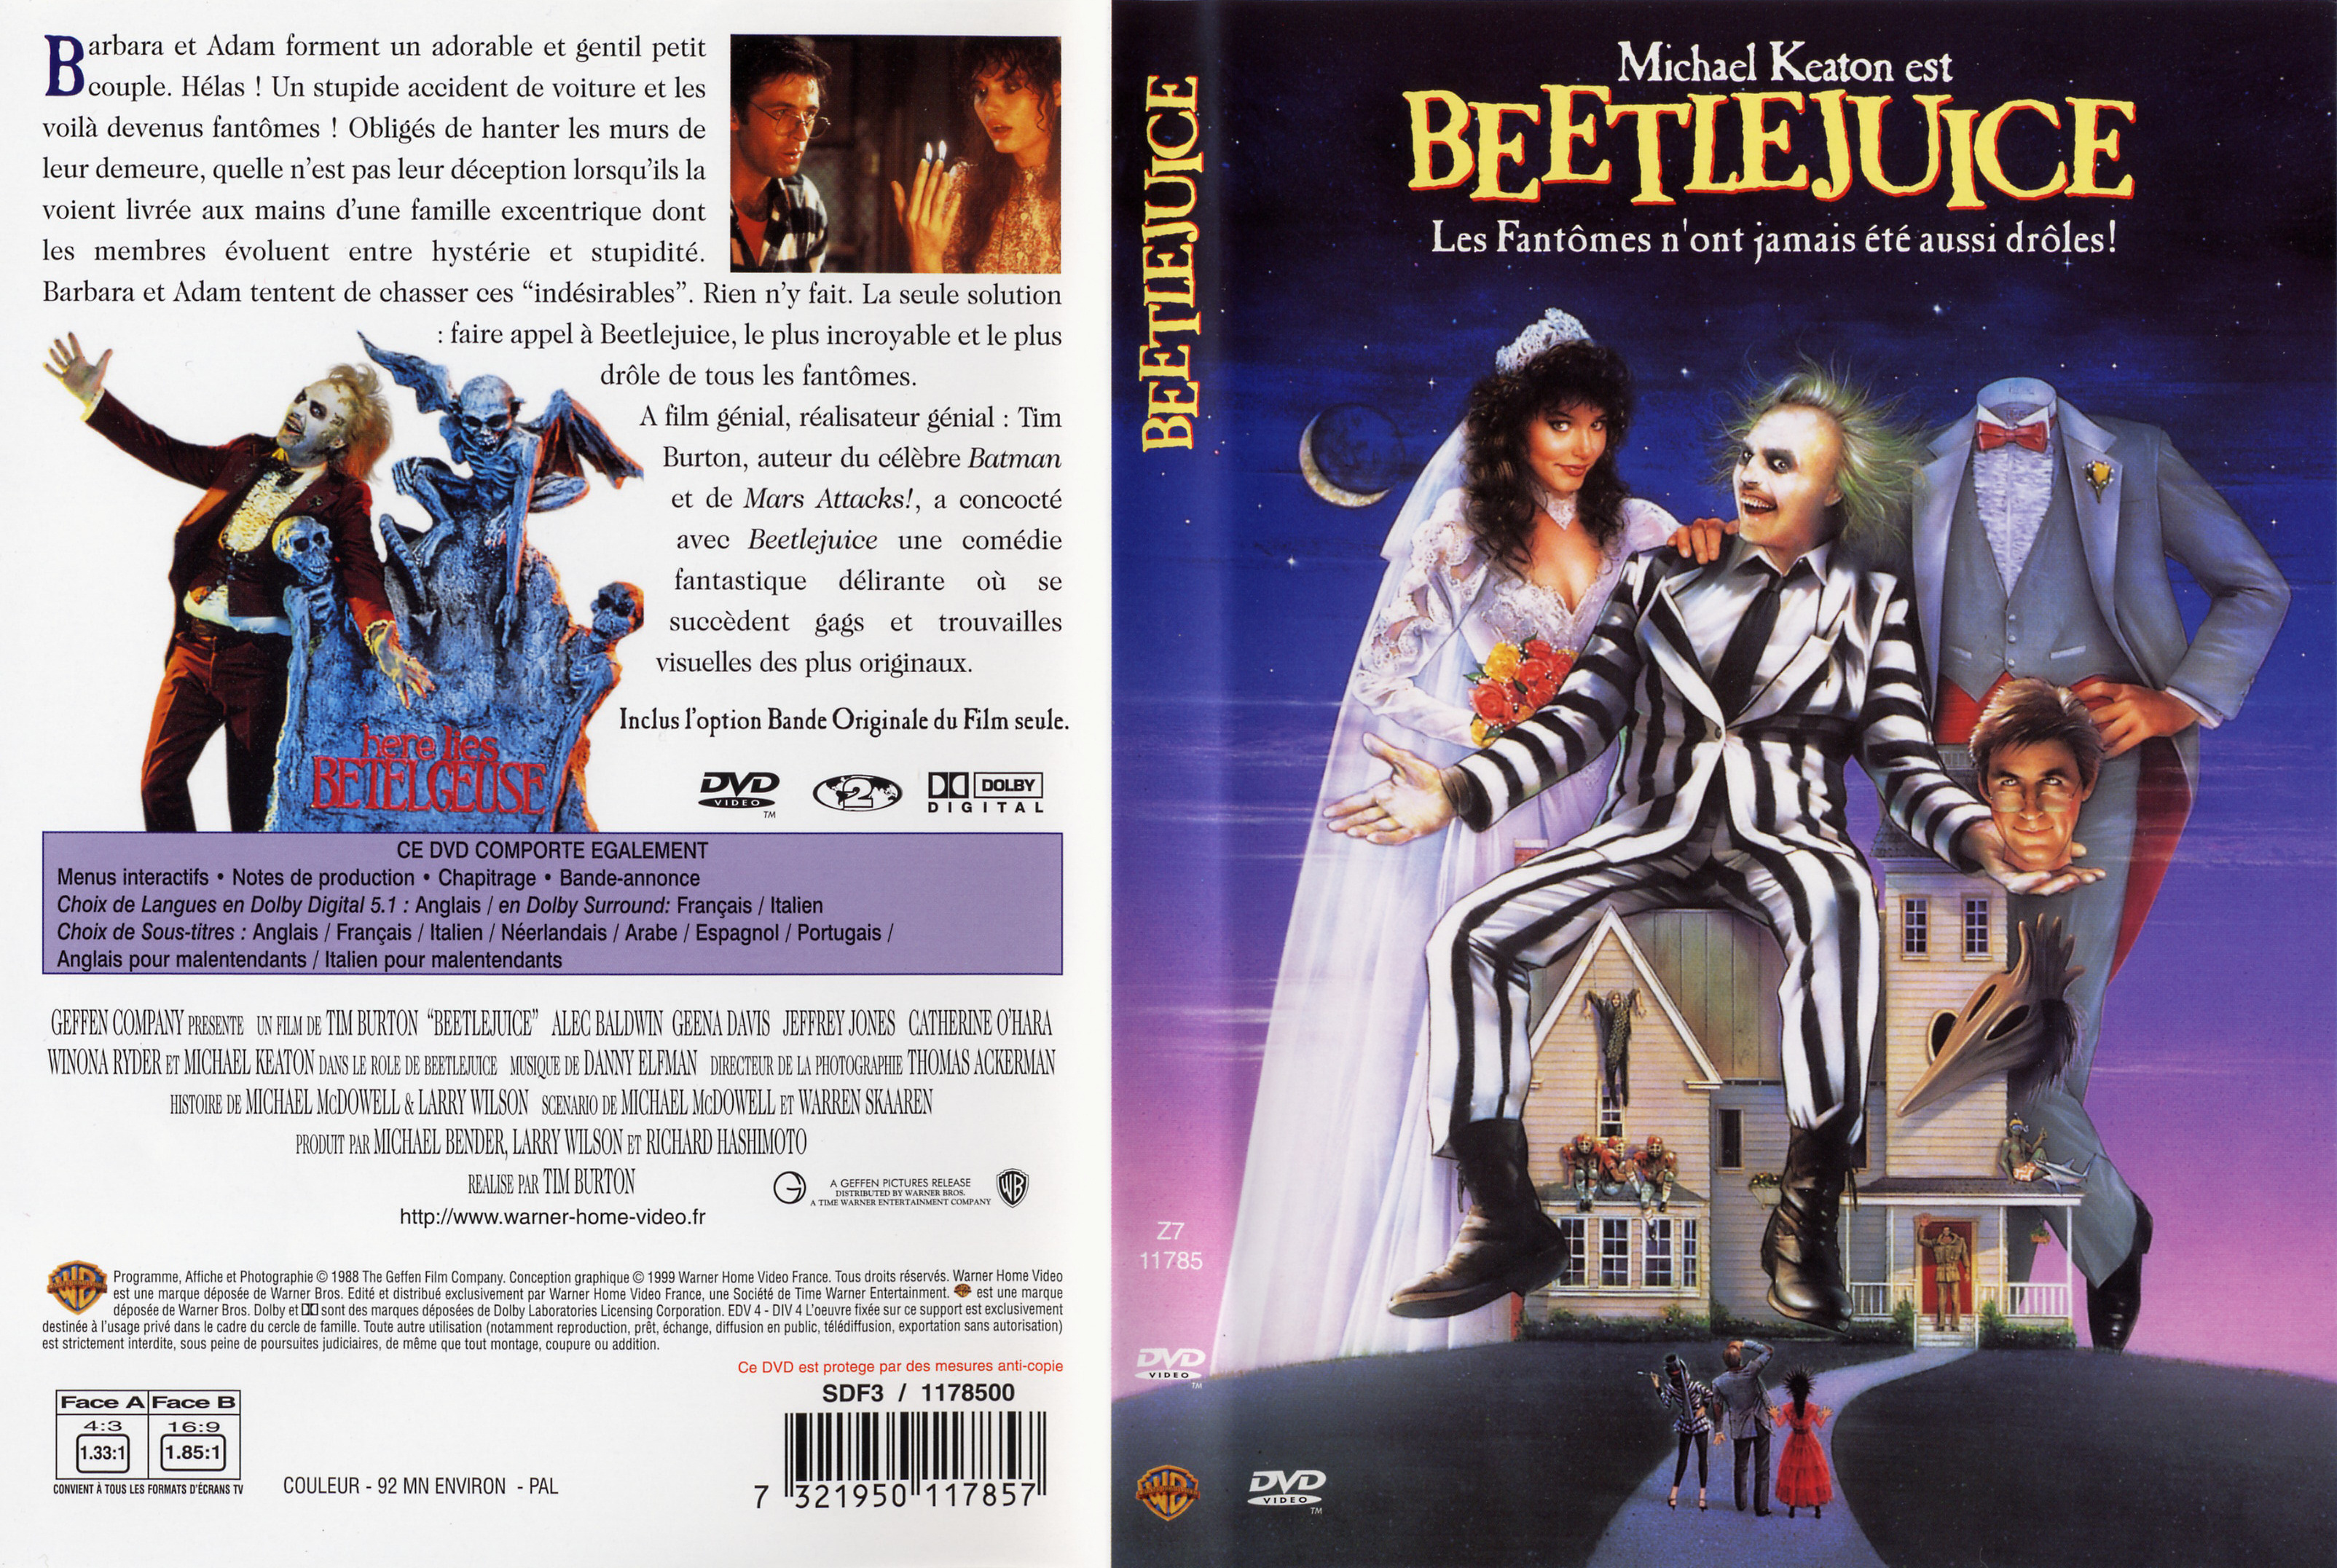 Jaquette DVD Beetlejuice